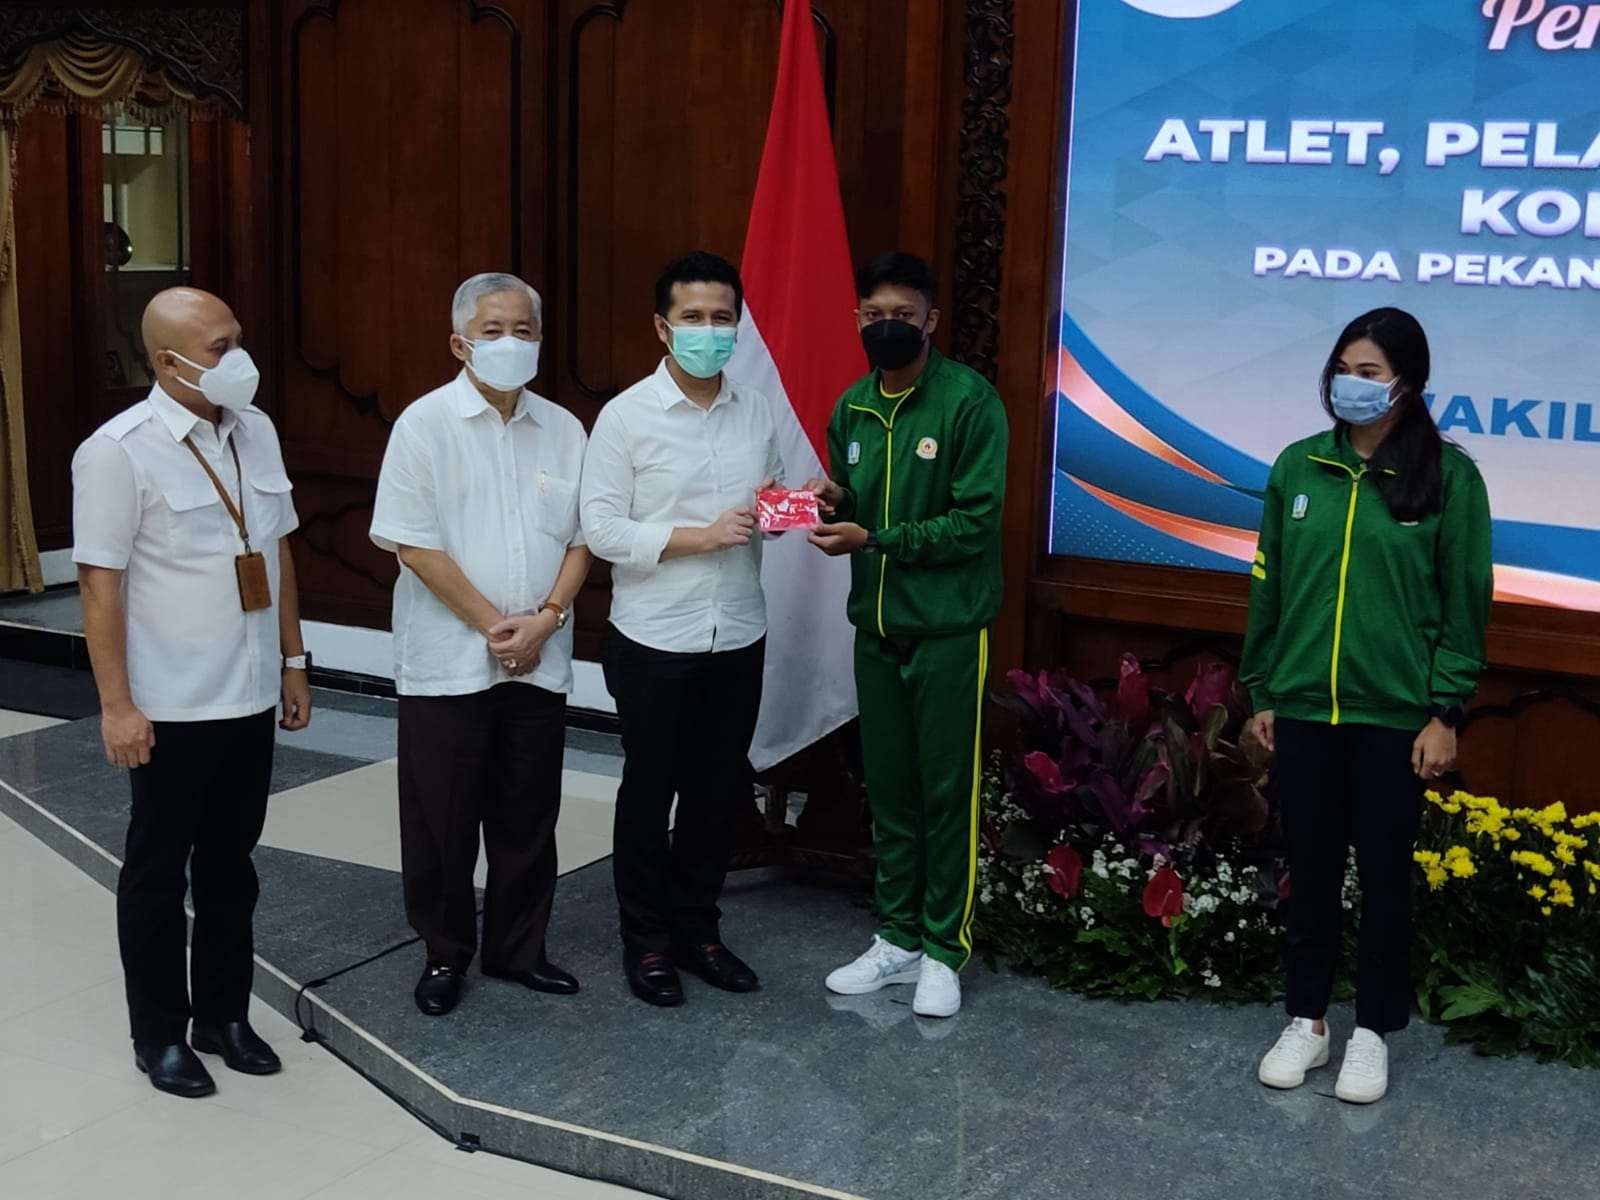 Wagub Jatim Emil Elestianto Dardak menyerahkan bonus pada atlet peraih medali di PON Papua di Gedung Binaloka Pemprov Jatim, Surabaya, Rabu 16 Februari 2022. (Foto: Fariz Yarbo/Ngopibareng.id)